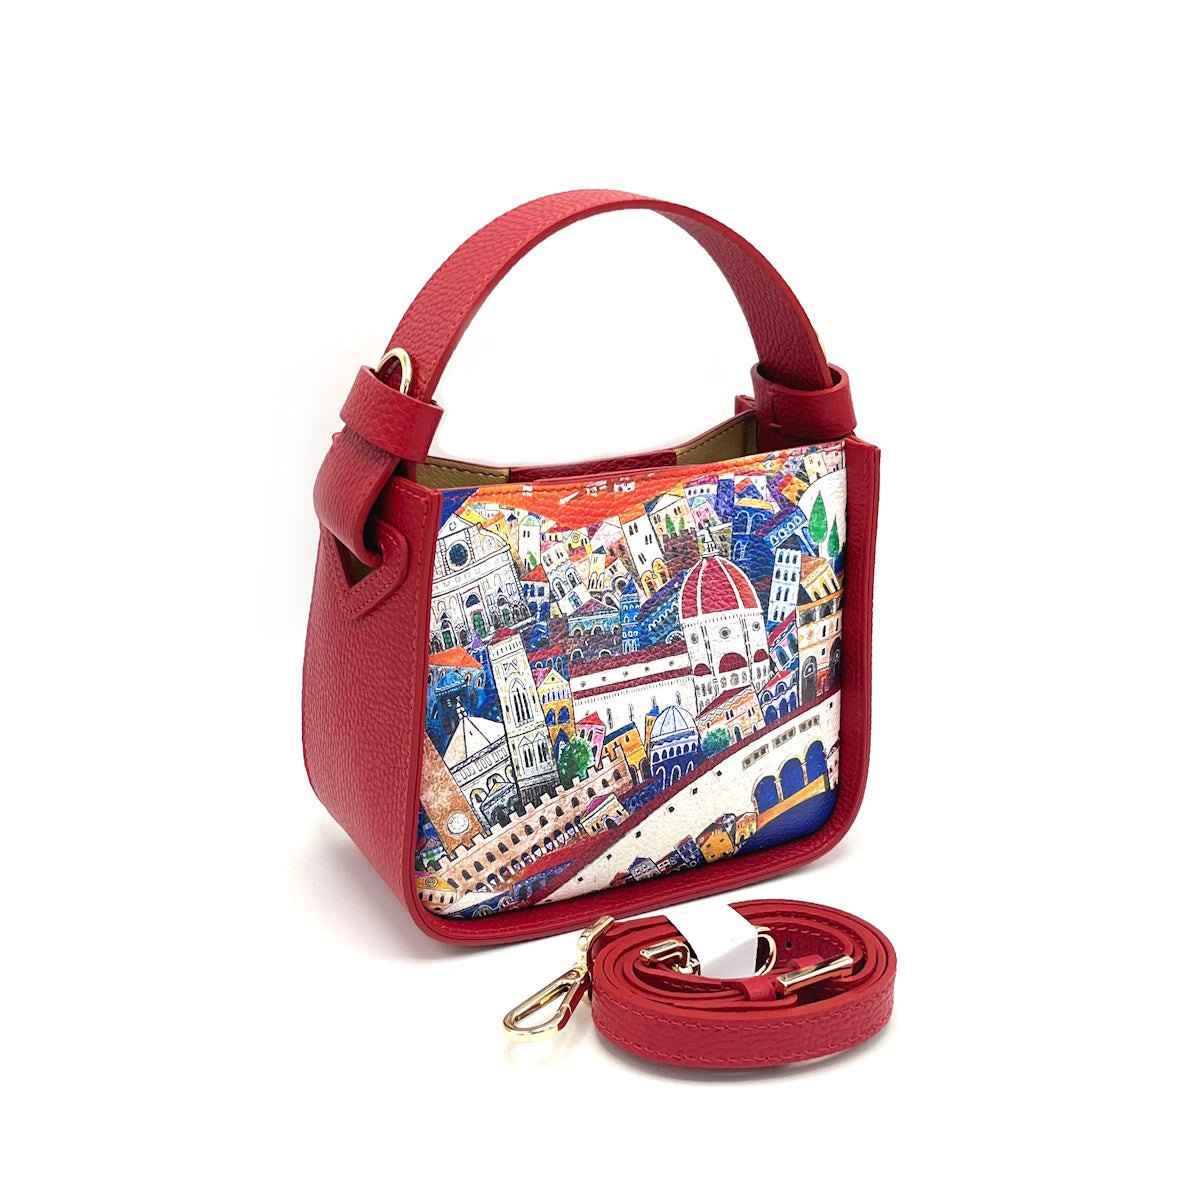 Printed genuine leather handbag, Made in Italy, art. 112482